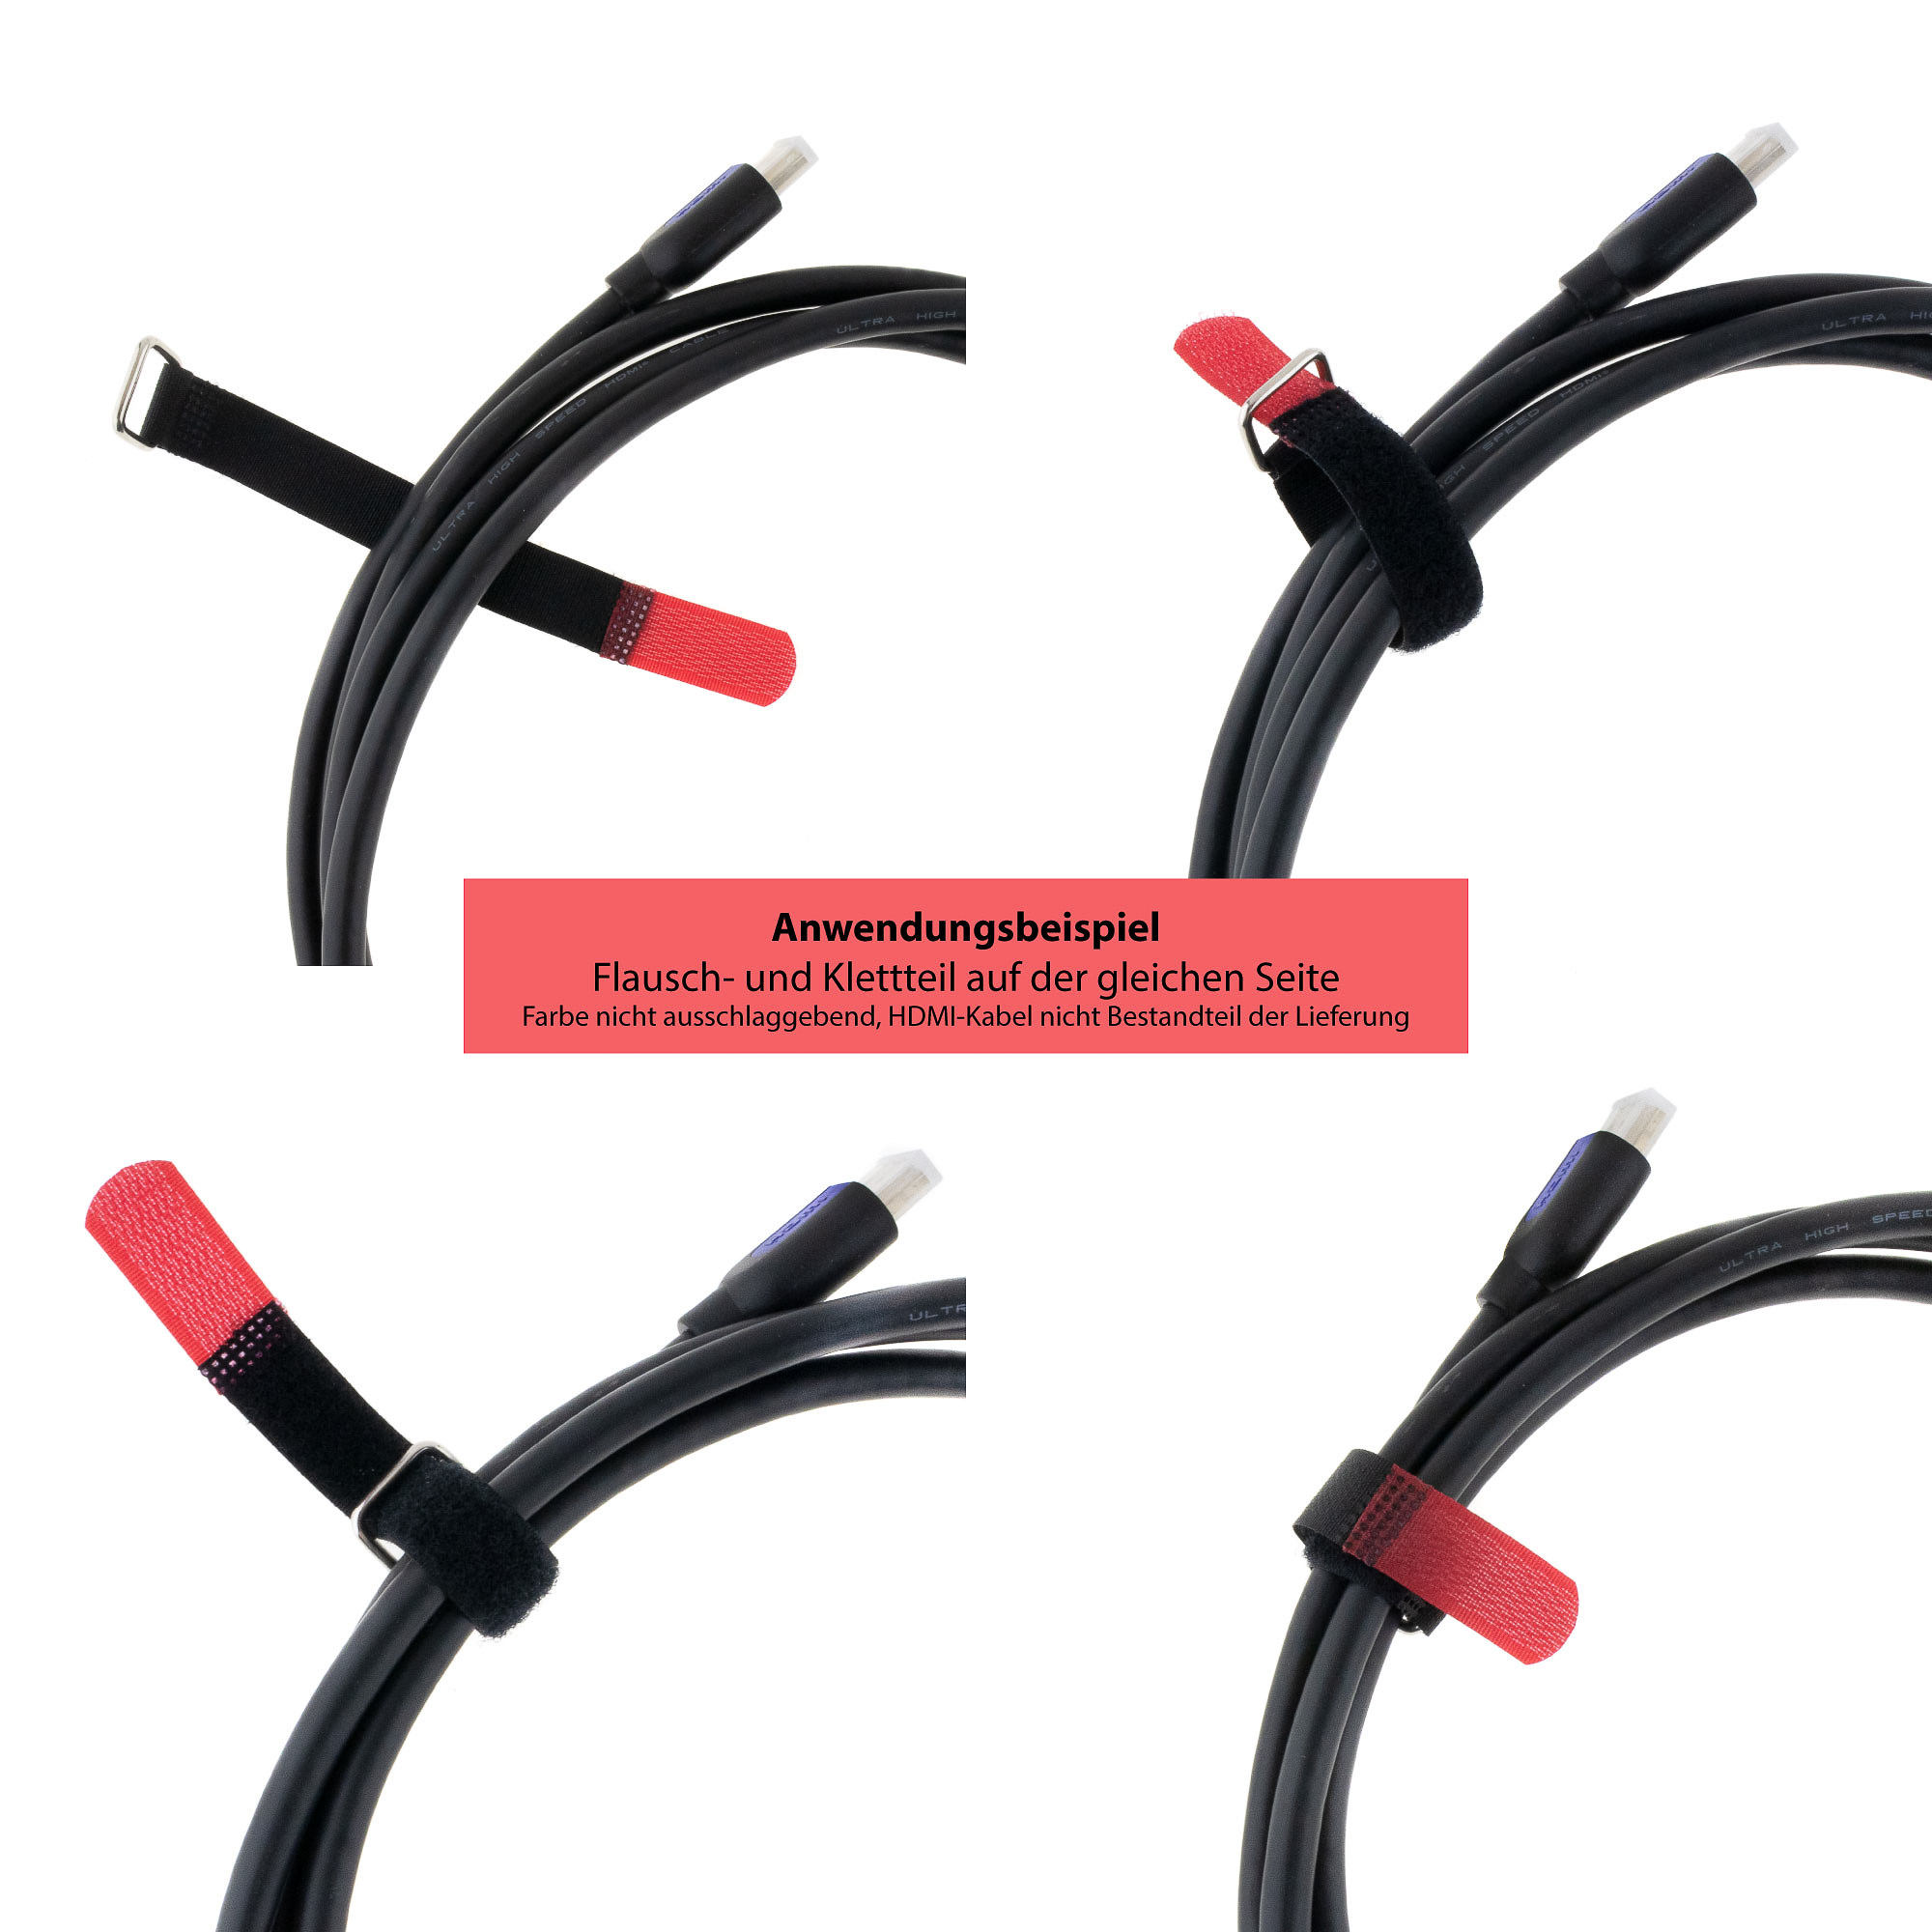 Hook-and-loop strap 200x20, black/blue, 10PCS